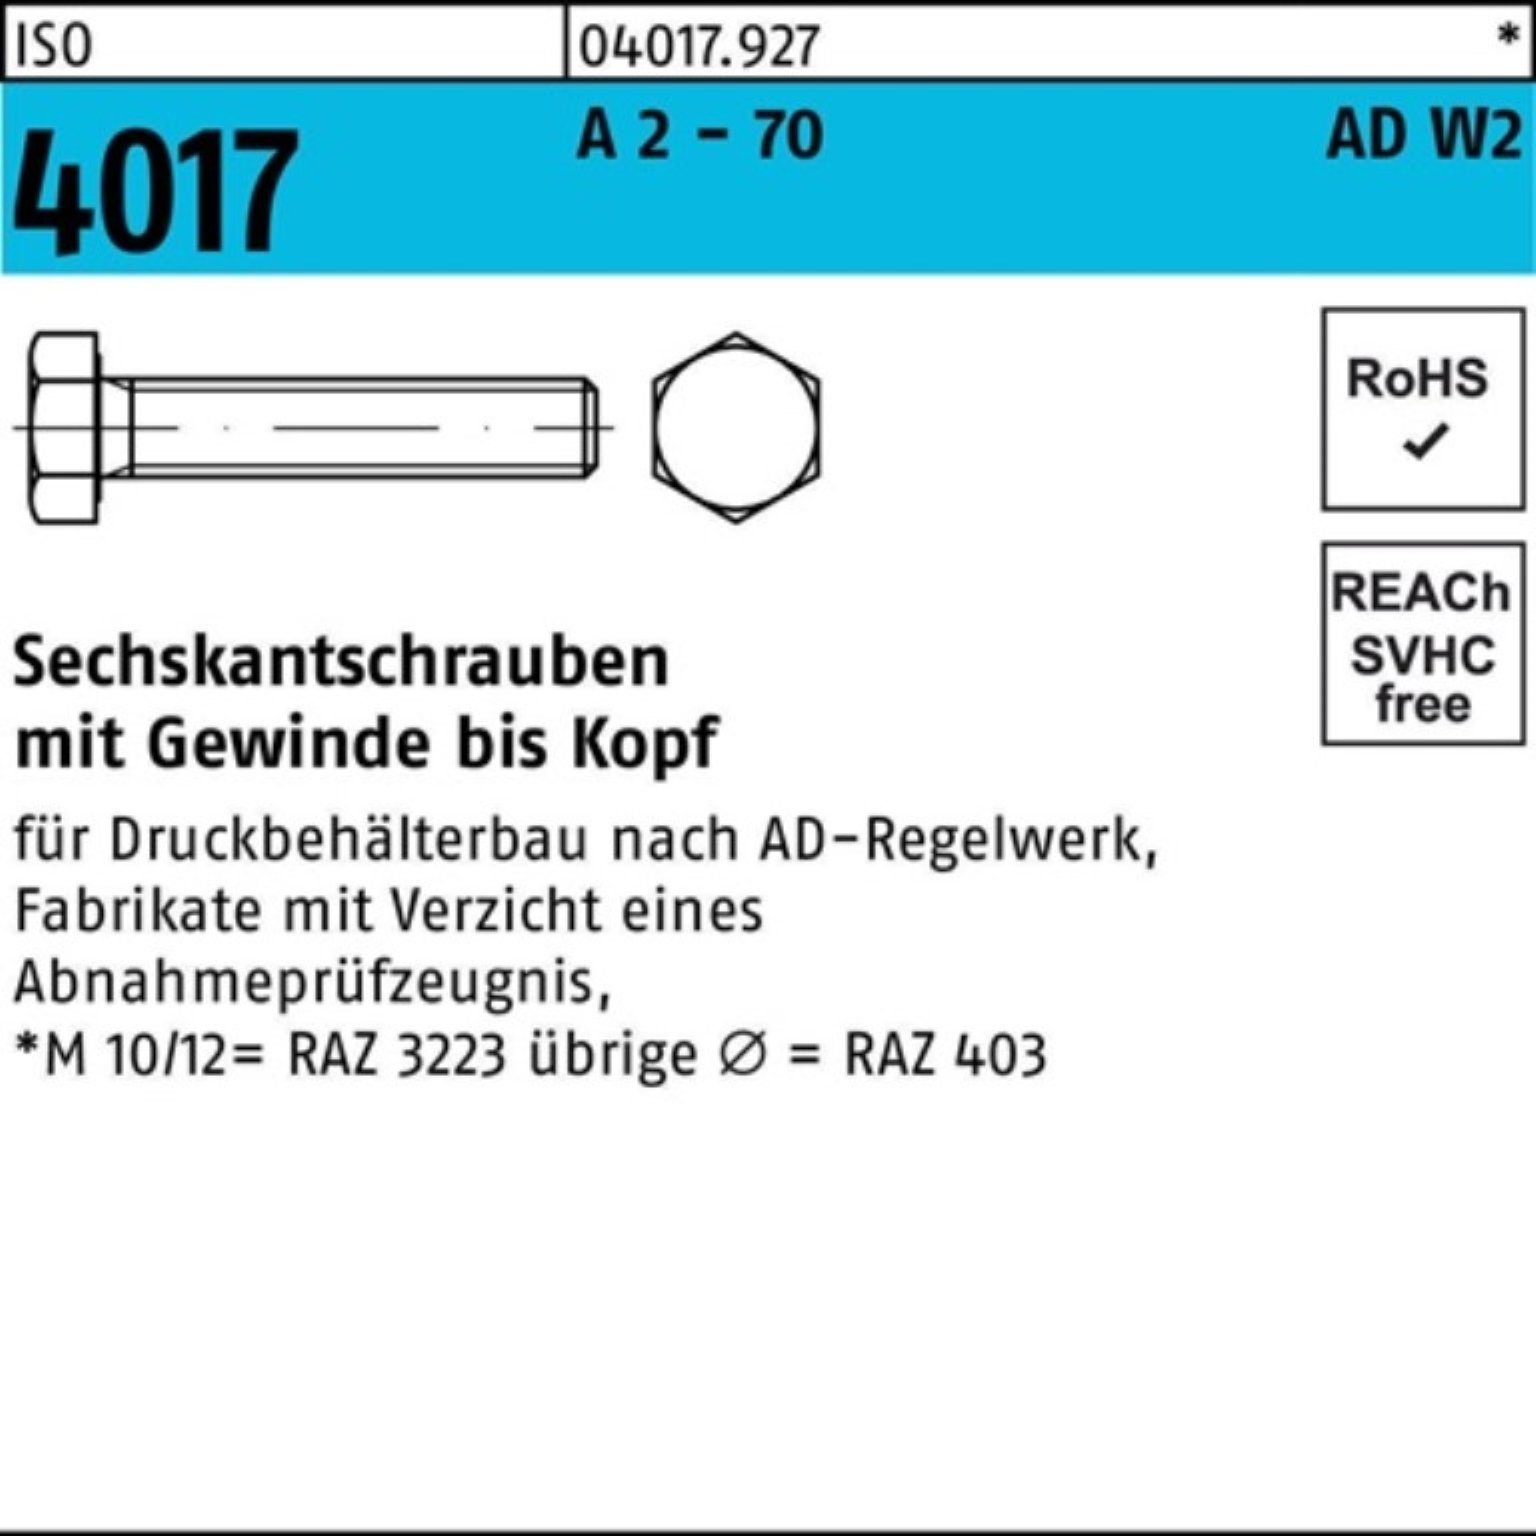 Pack A Sechskantschraube 4017 - AD-W2 ISO 50 Sechskantschraube VG St 100er Bufab 70 M16x 2 25